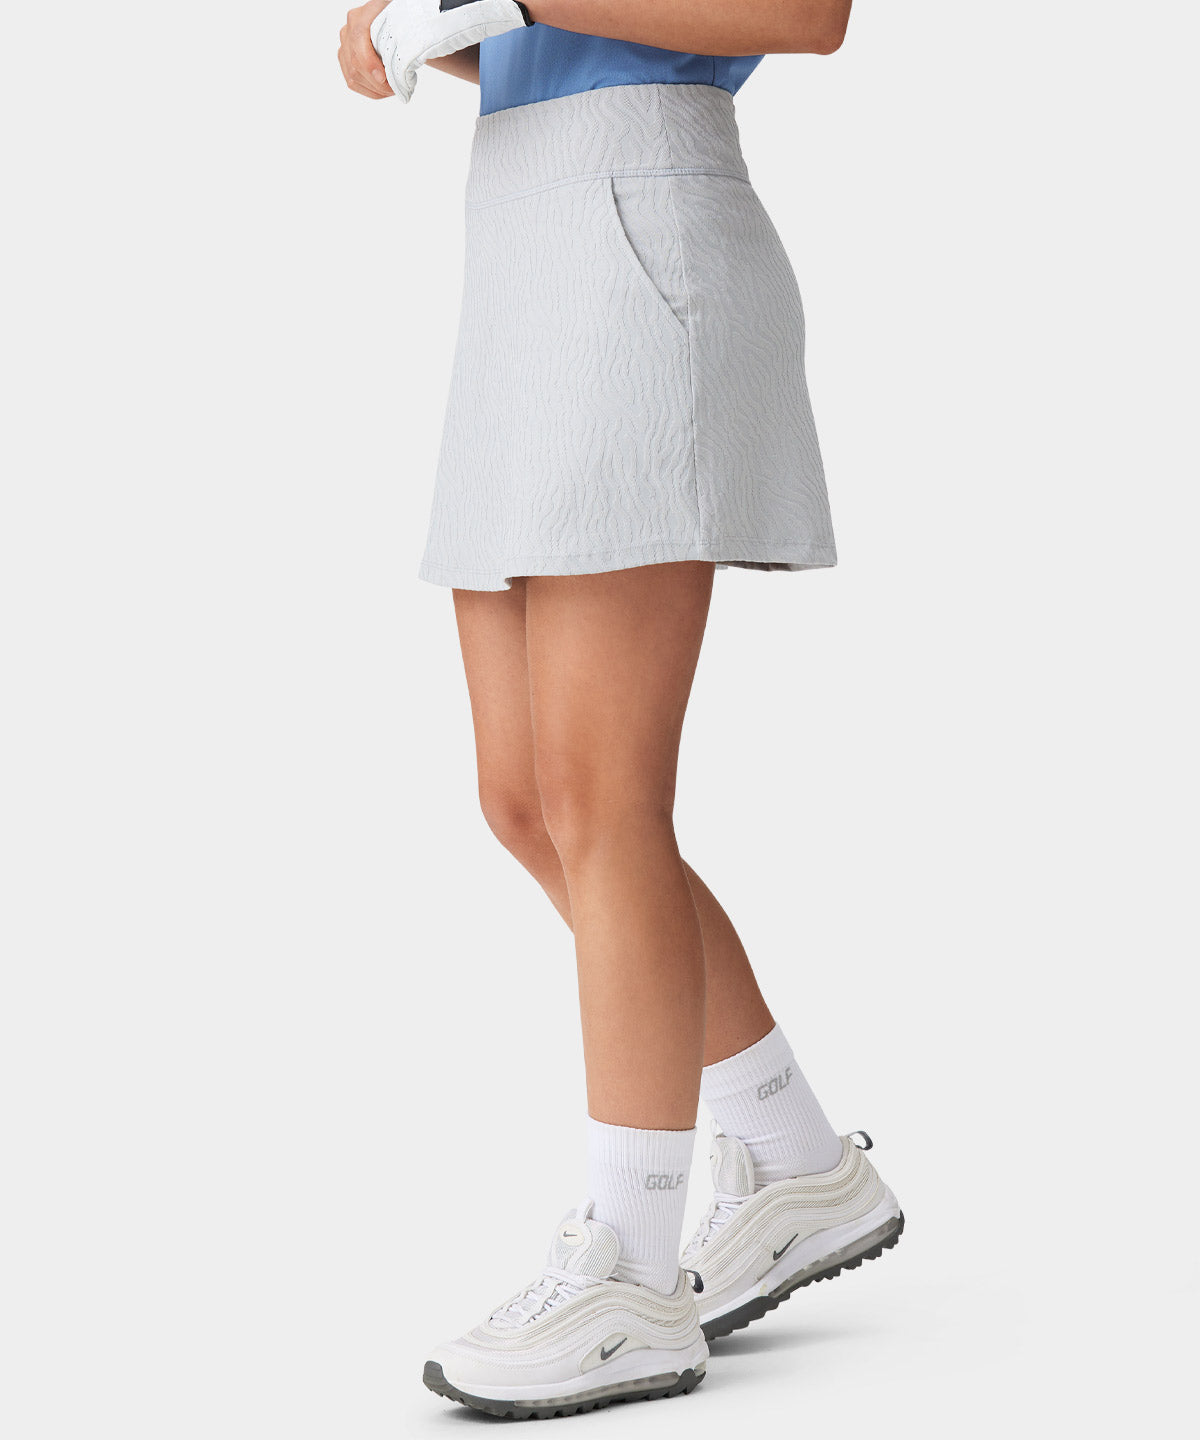 Rori Light Gray Performance Skirt